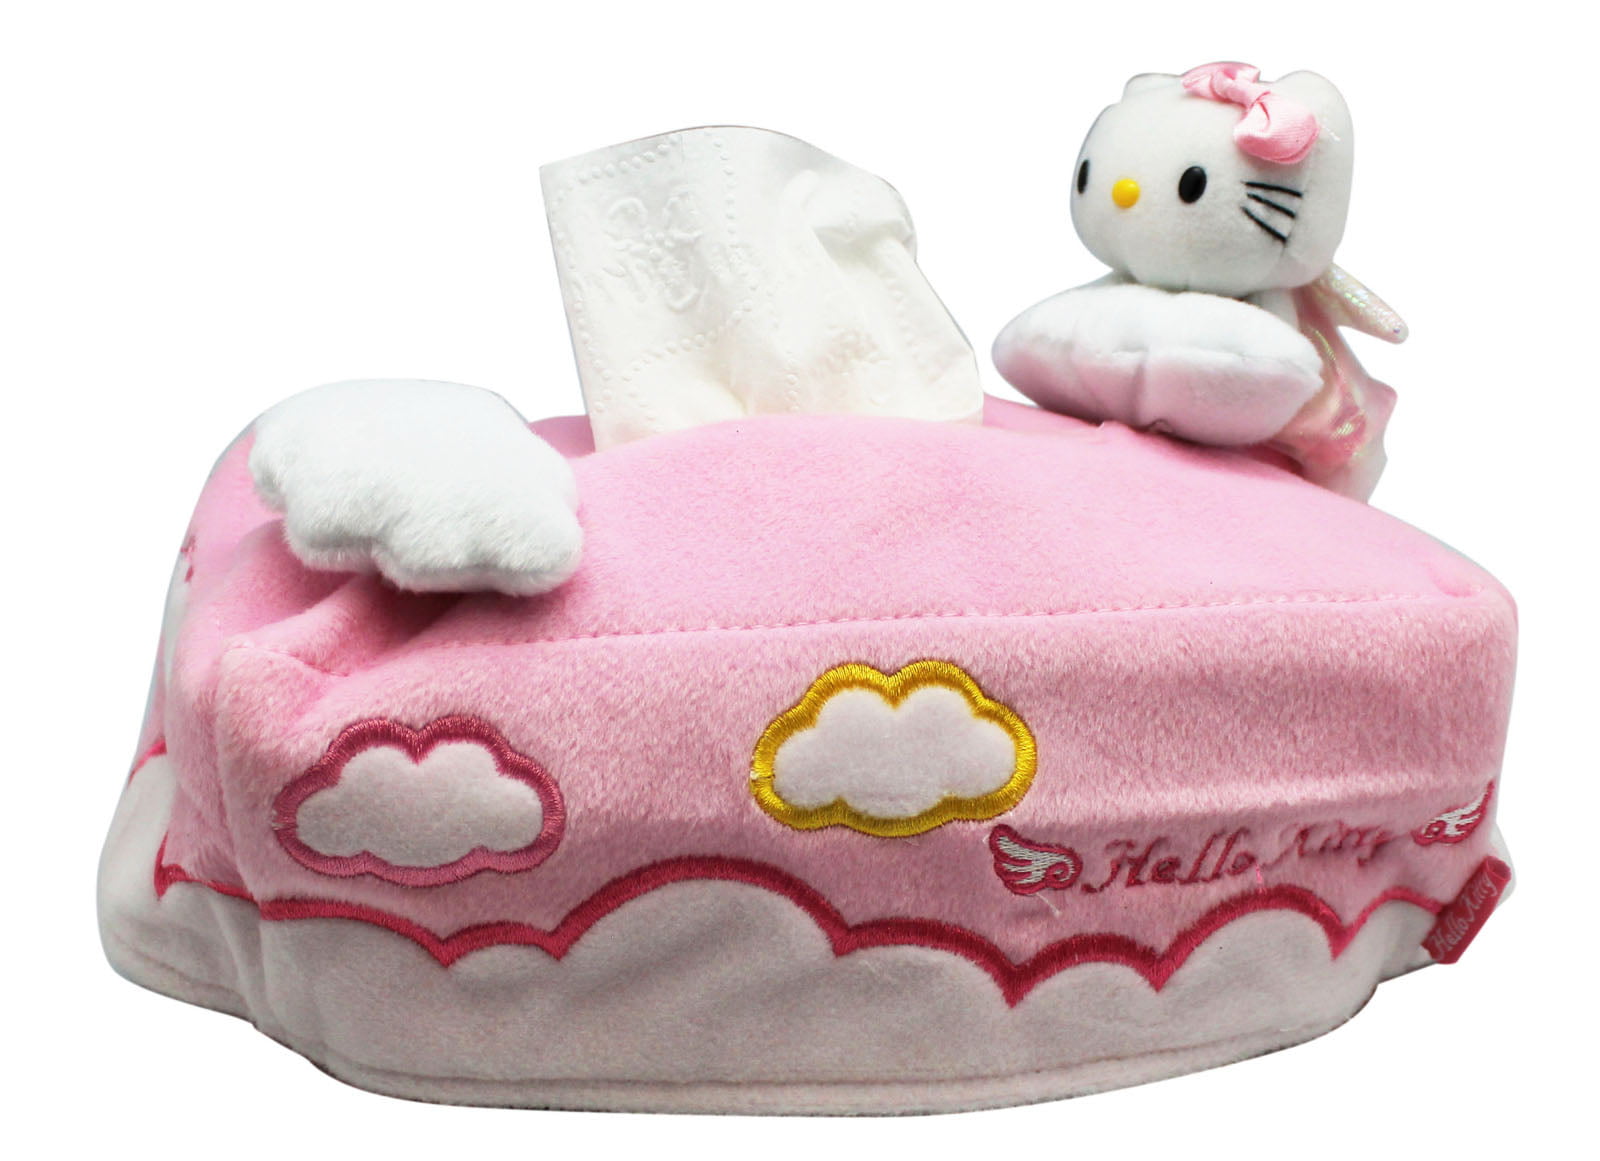 Sanrio Hello Kitty Heavenly Themes Plush Tissue Box Cover